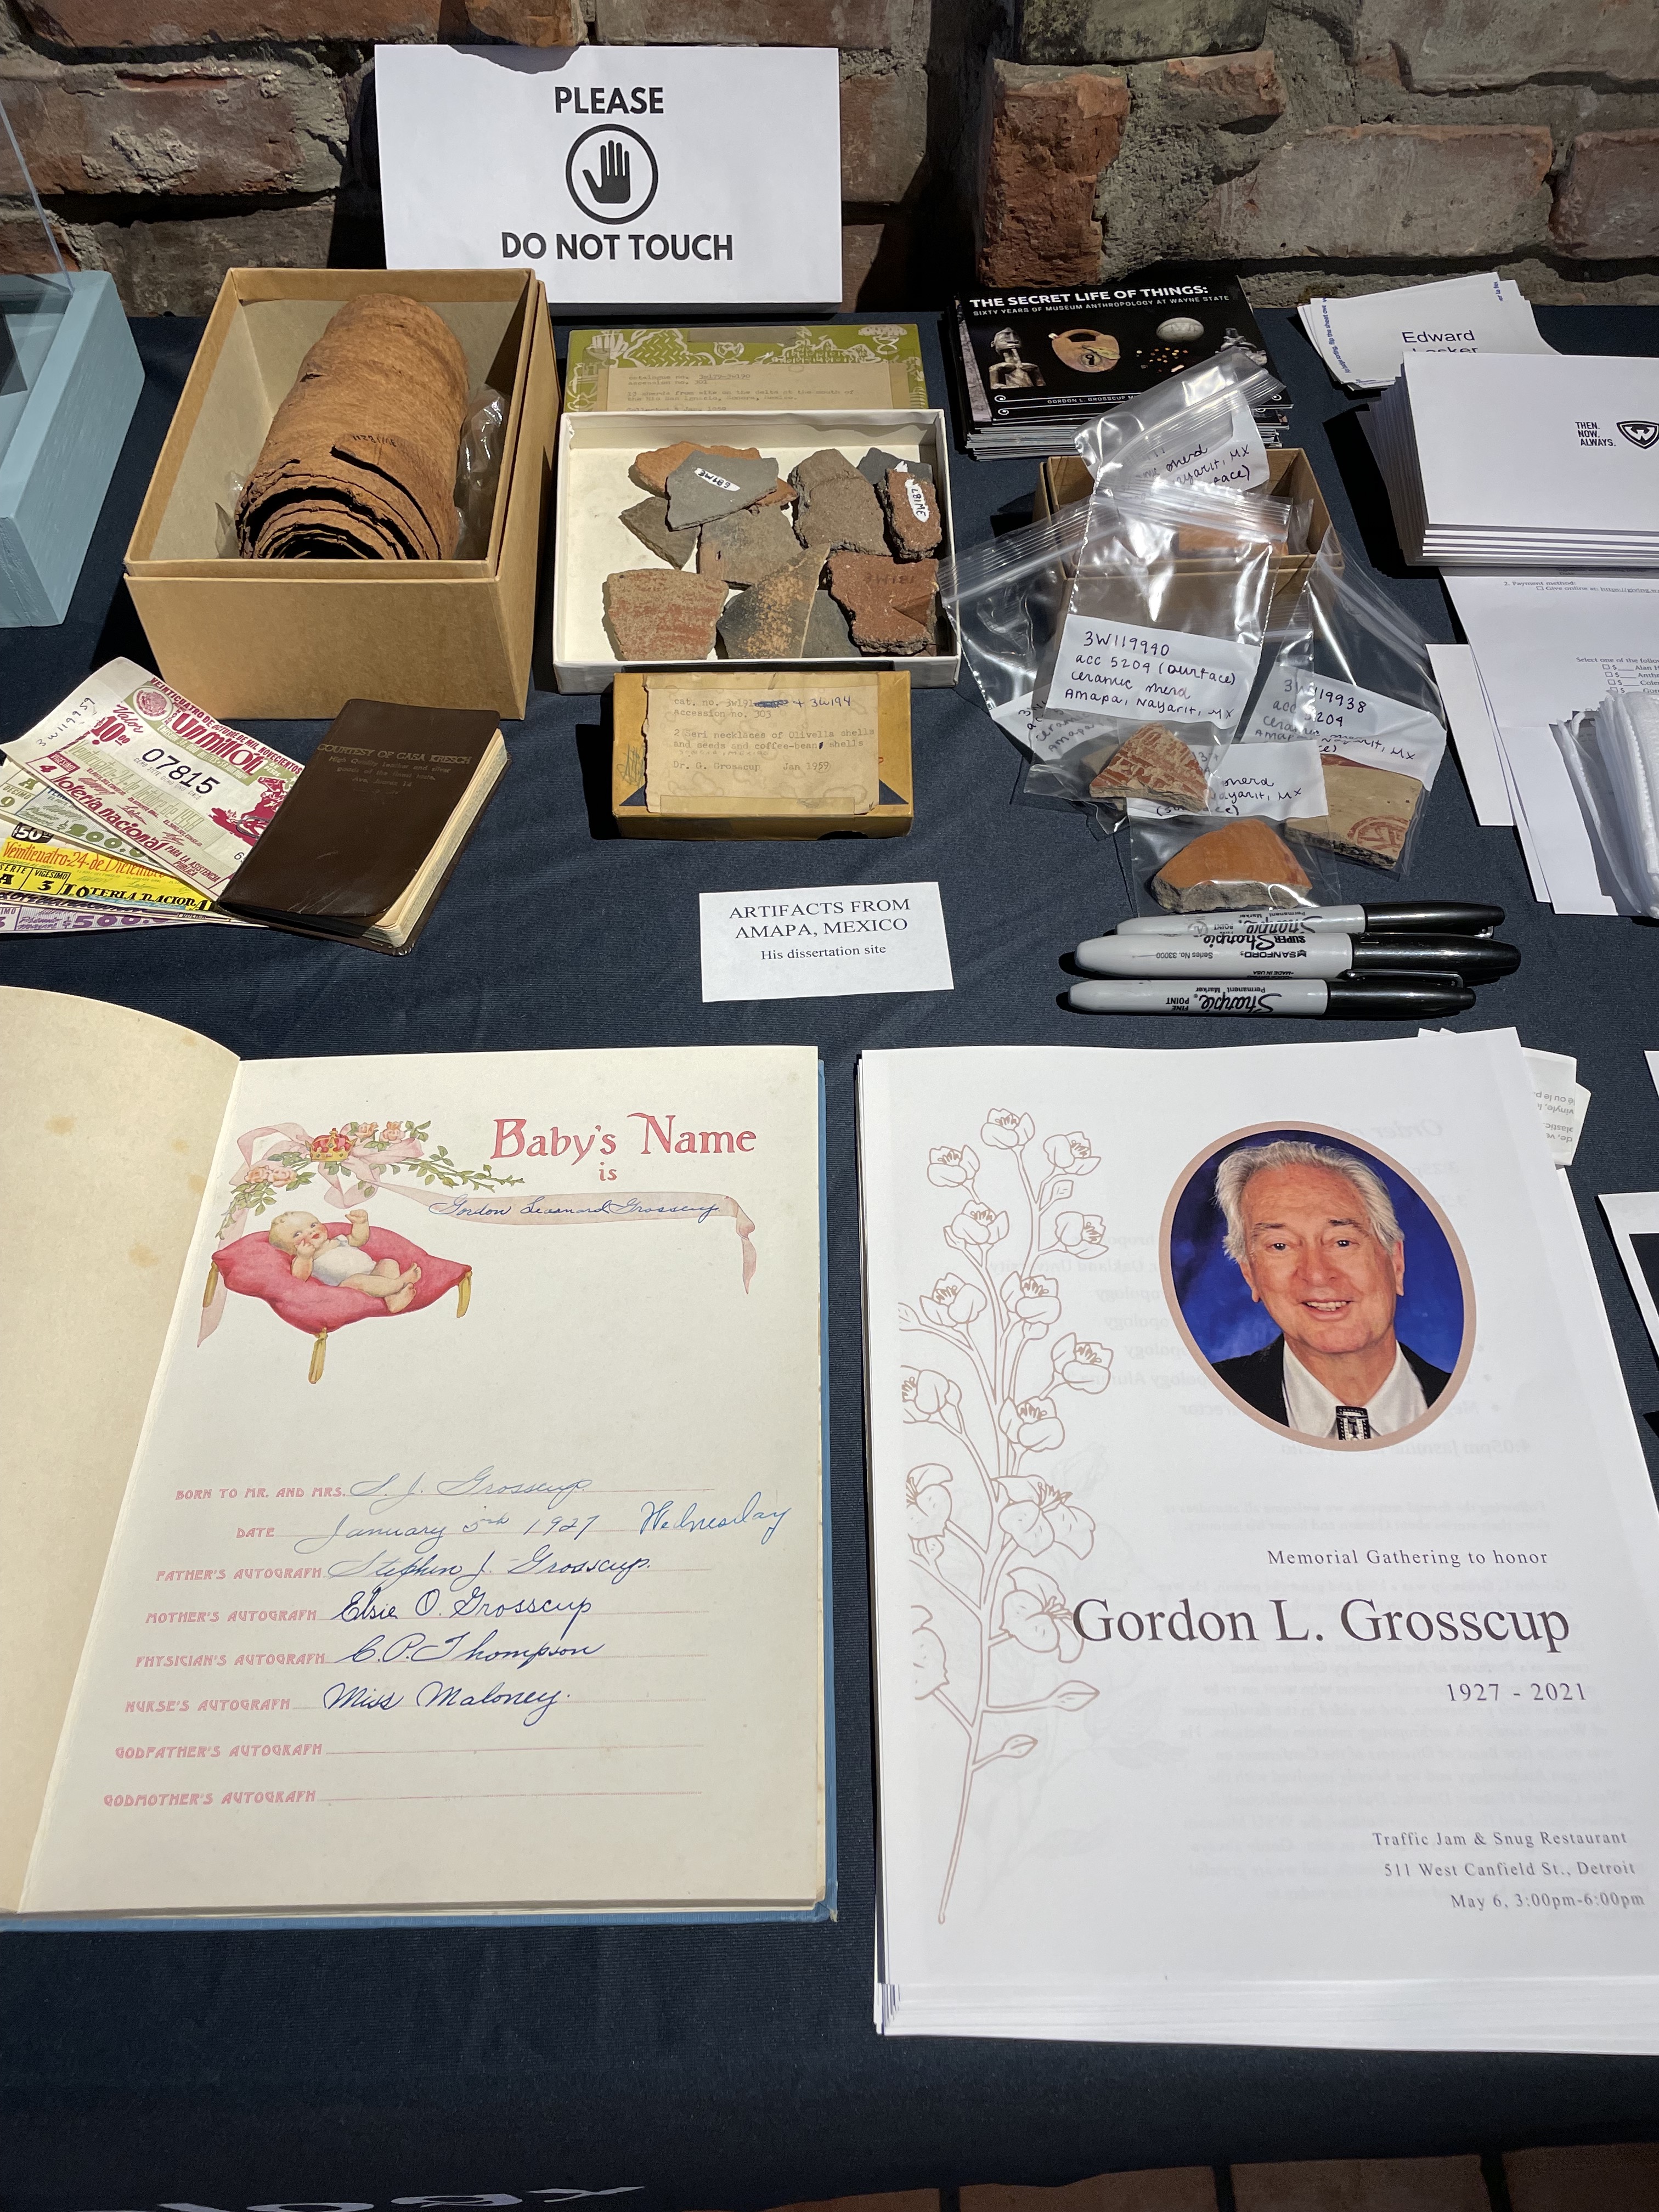 Memorial Celebration for Professor Emeritus Gordon L. Grosscup